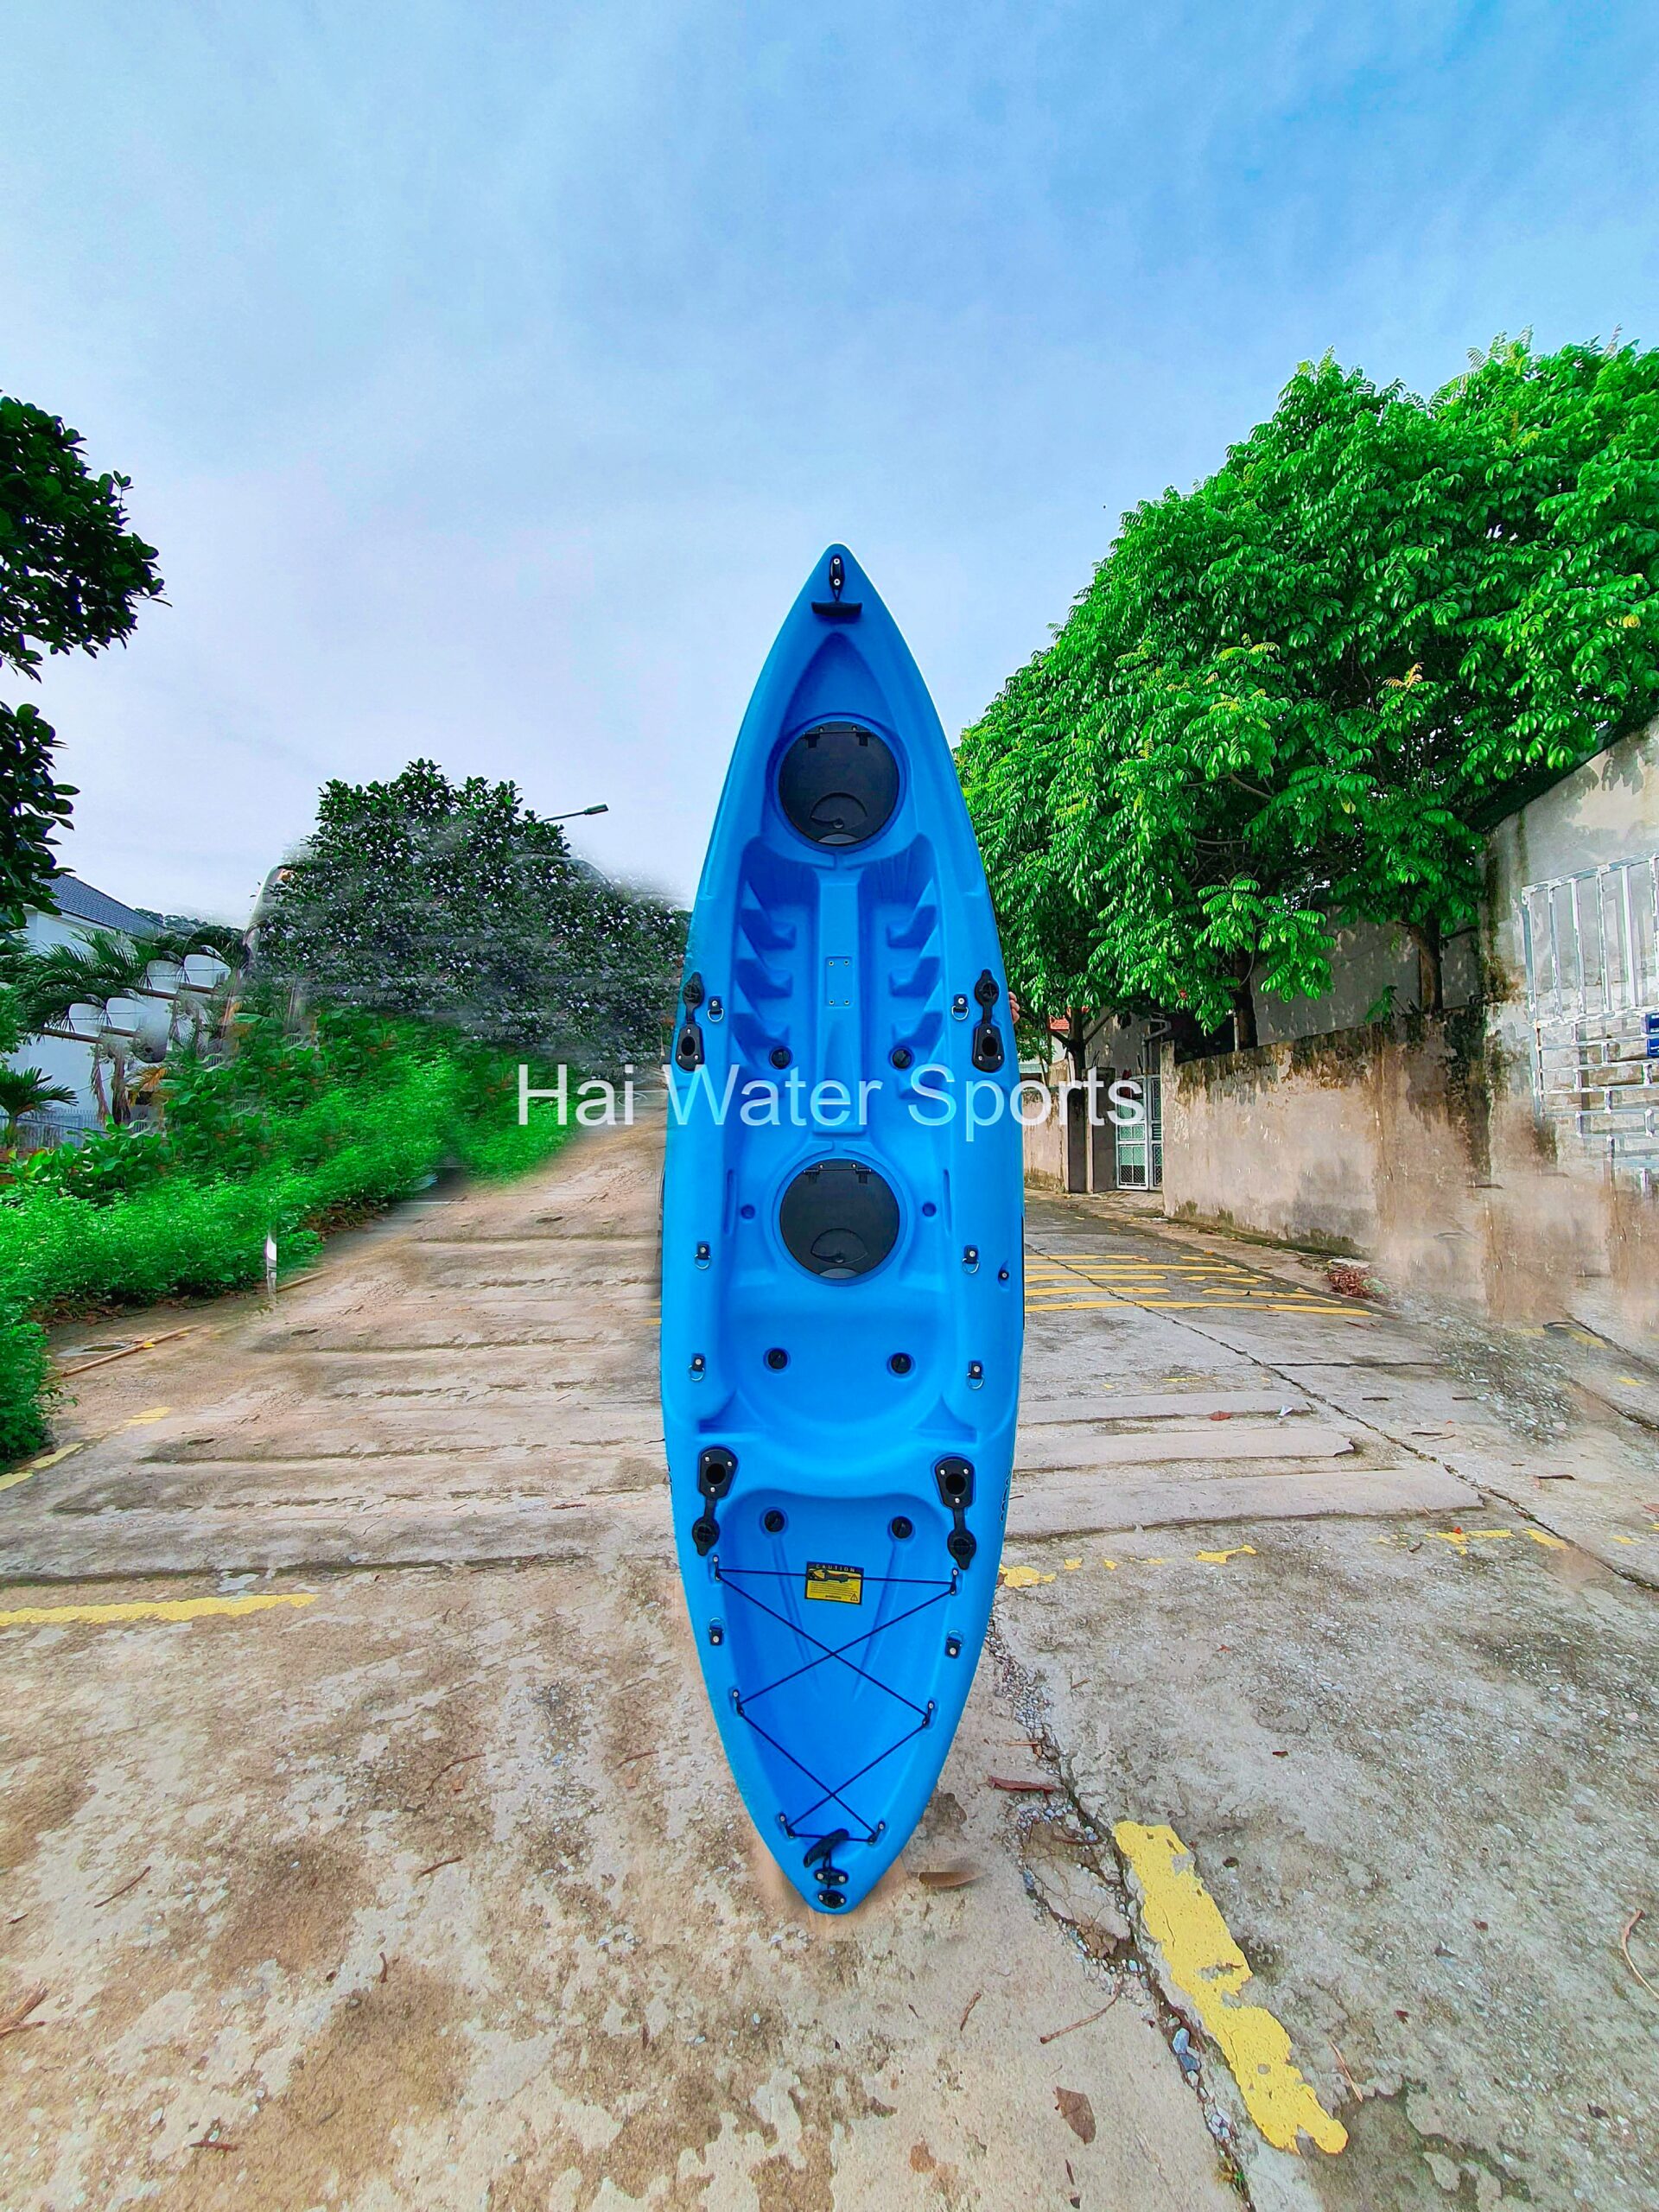 Hai Water Sports